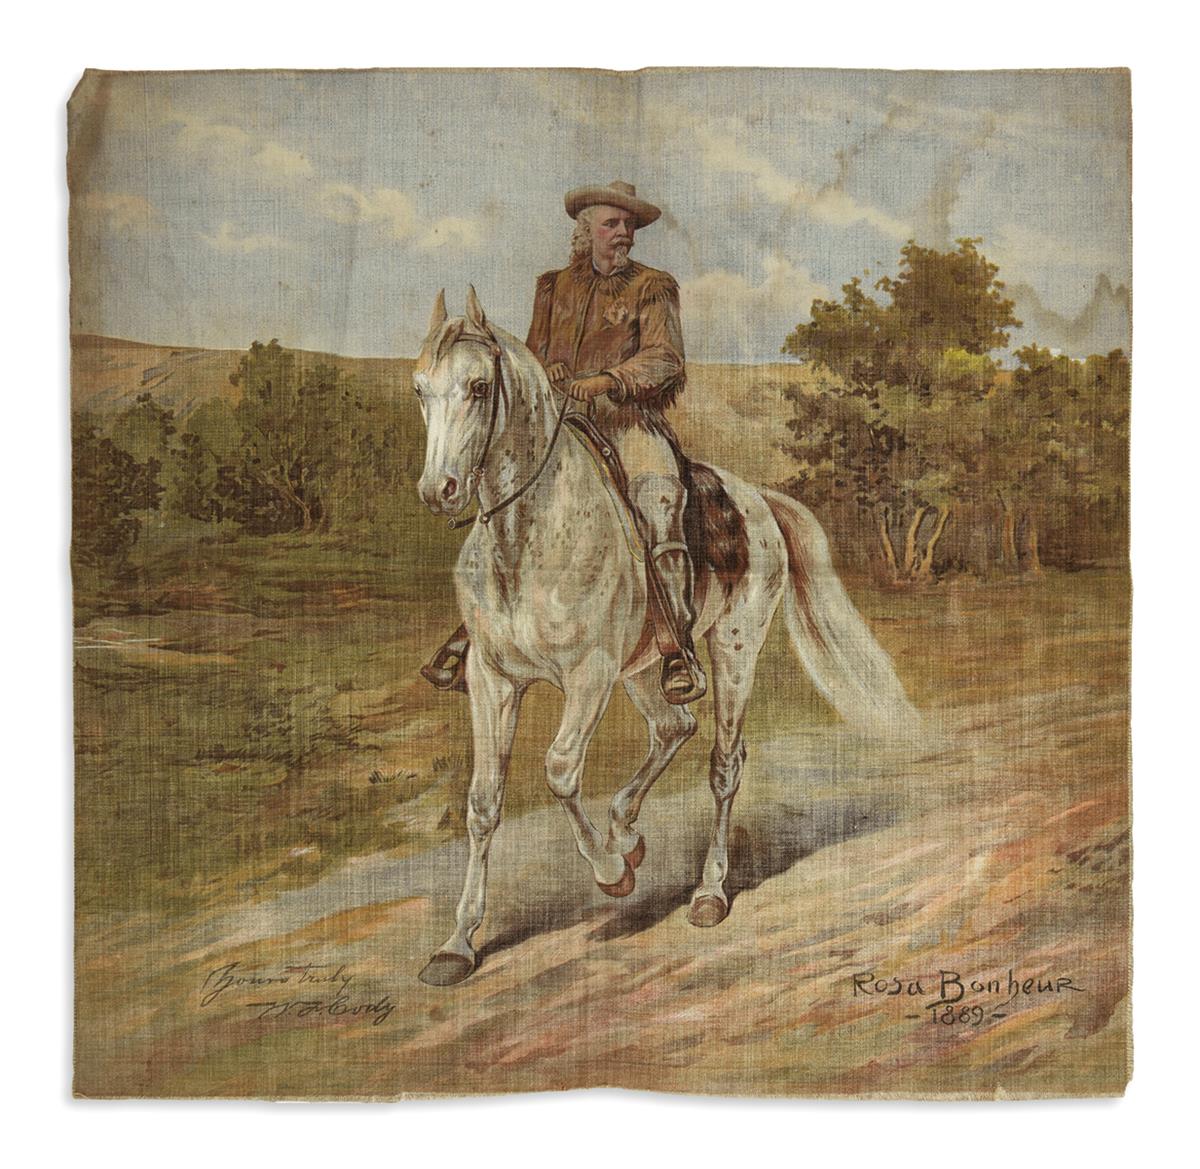 (WEST.) Bonheur, Rosa; artist. Printed textile of Buffalo Bill Cody.